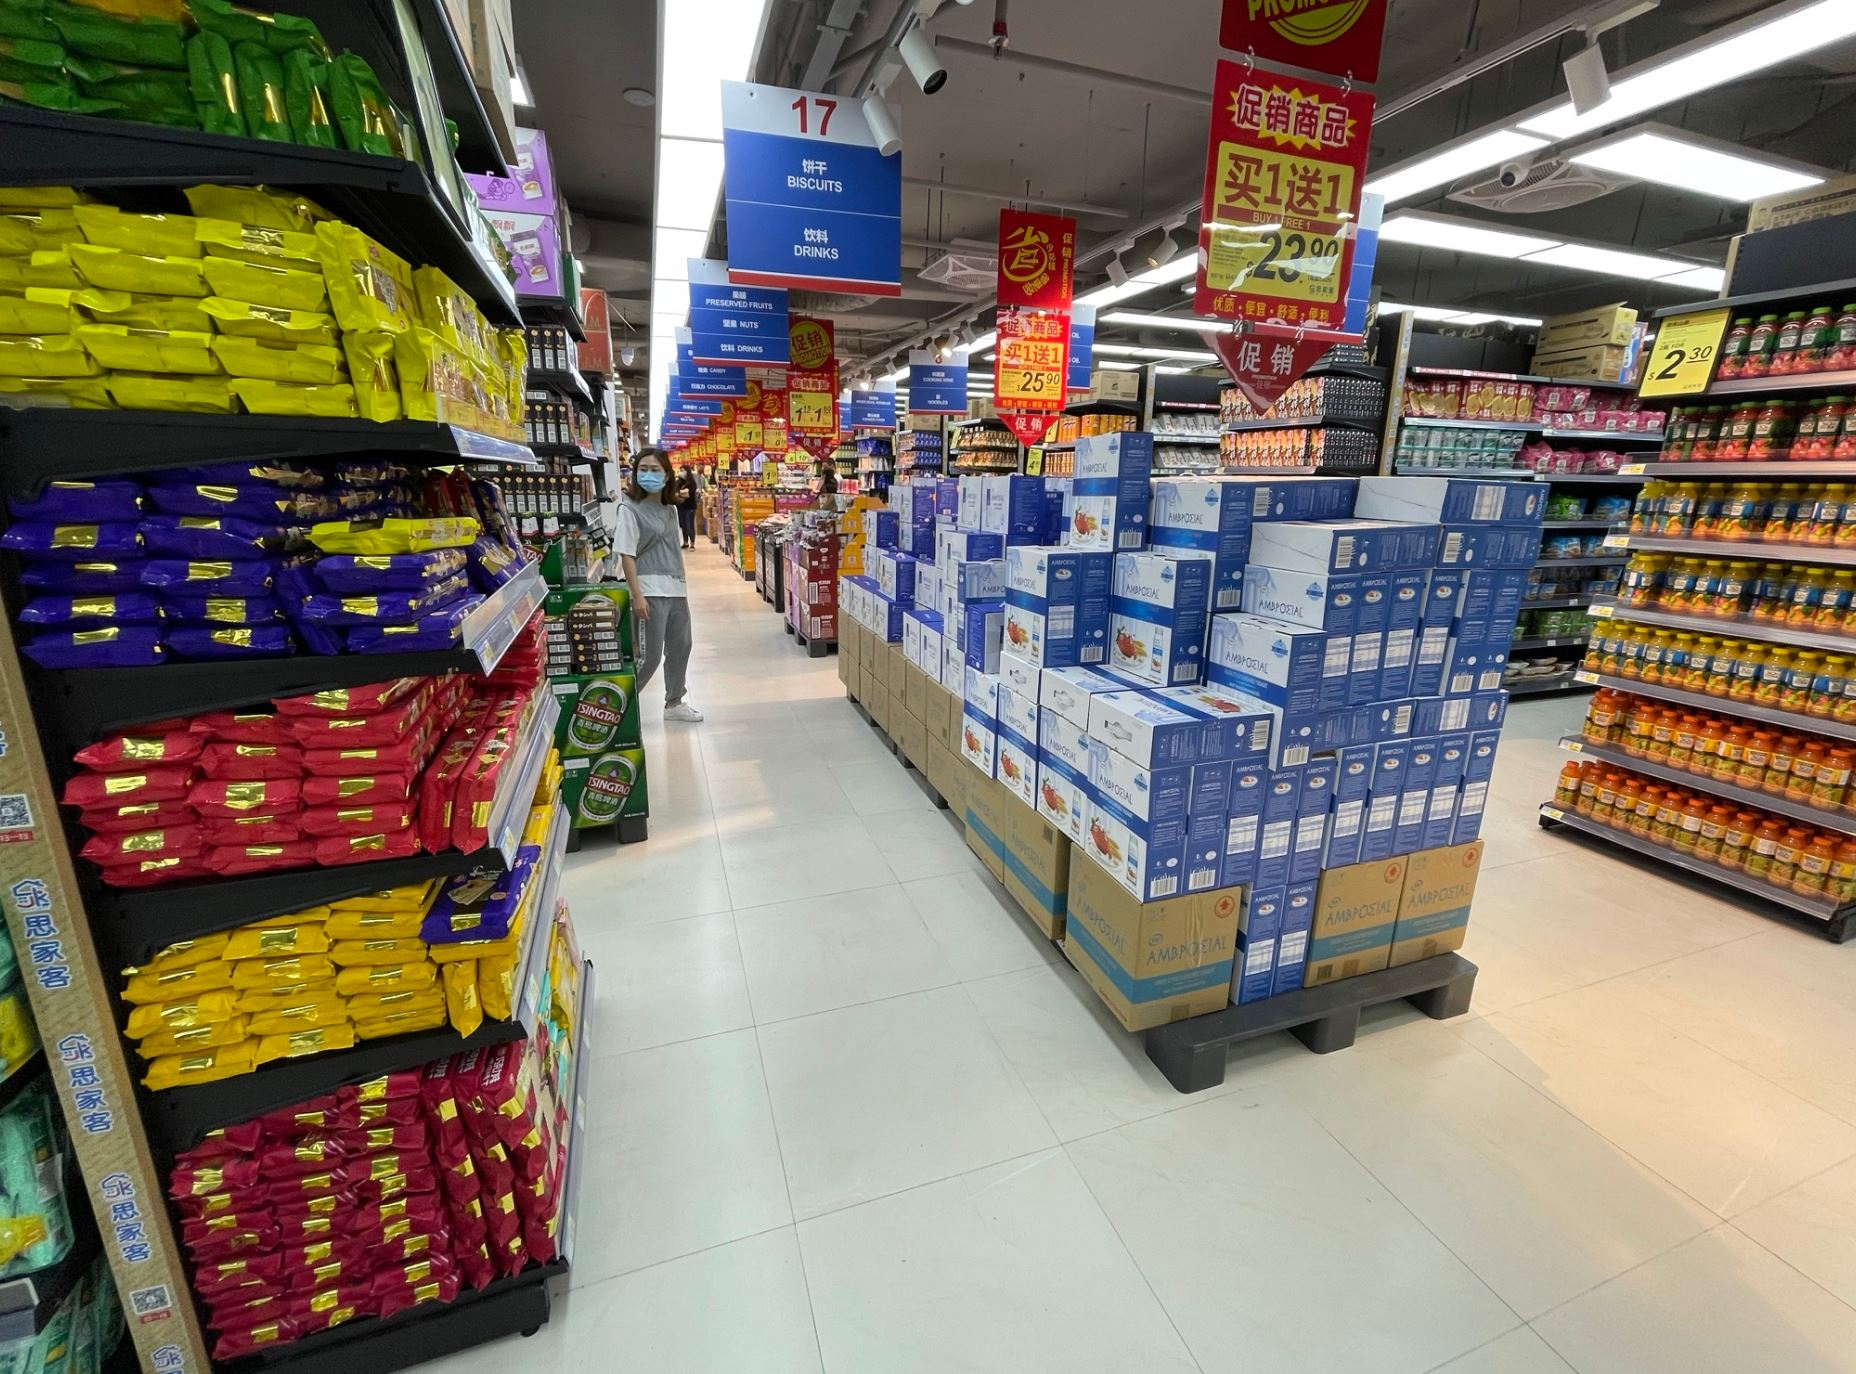 Chinatown 24-hour Supermarket sells $1.33 Hai Chi Jia Cup Noodle, Doraemon Lipton Milk Tea, Yogurt Vodka and more